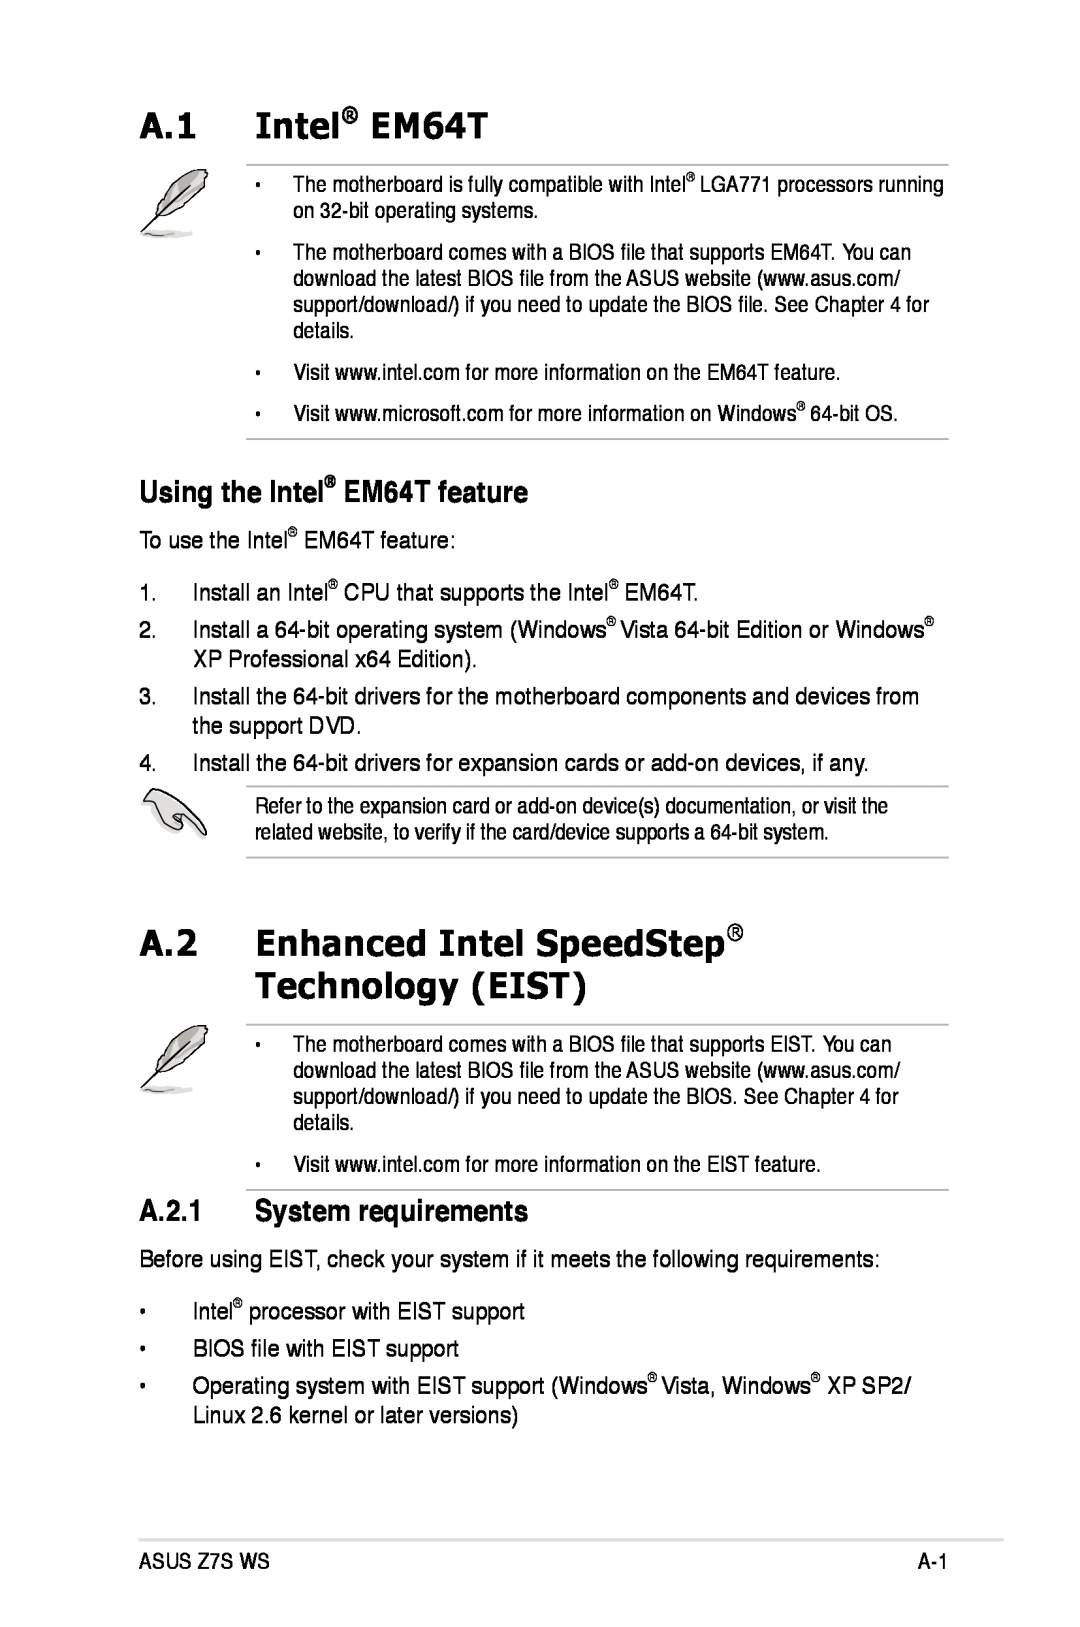 Asus Z7S WS manual A.1 Intel EM64T, A.2 Enhanced Intel SpeedStep Technology EIST, Using the Intel EM64T feature 